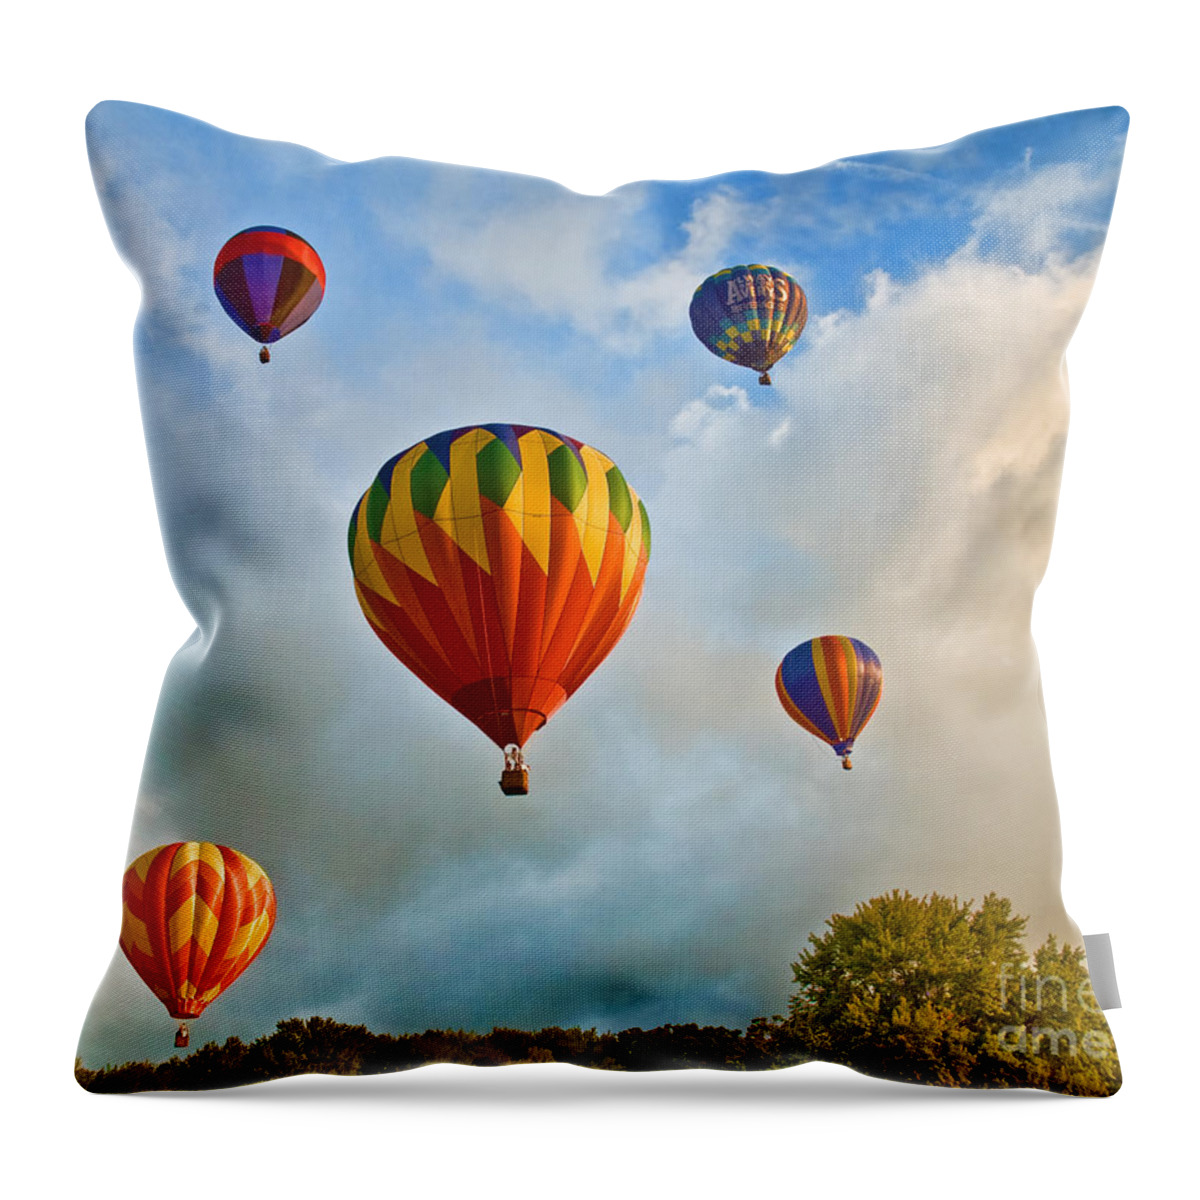 Hot Air Balloon Throw Pillow featuring the photograph Plainville Balloons 2 by Edward Sobuta